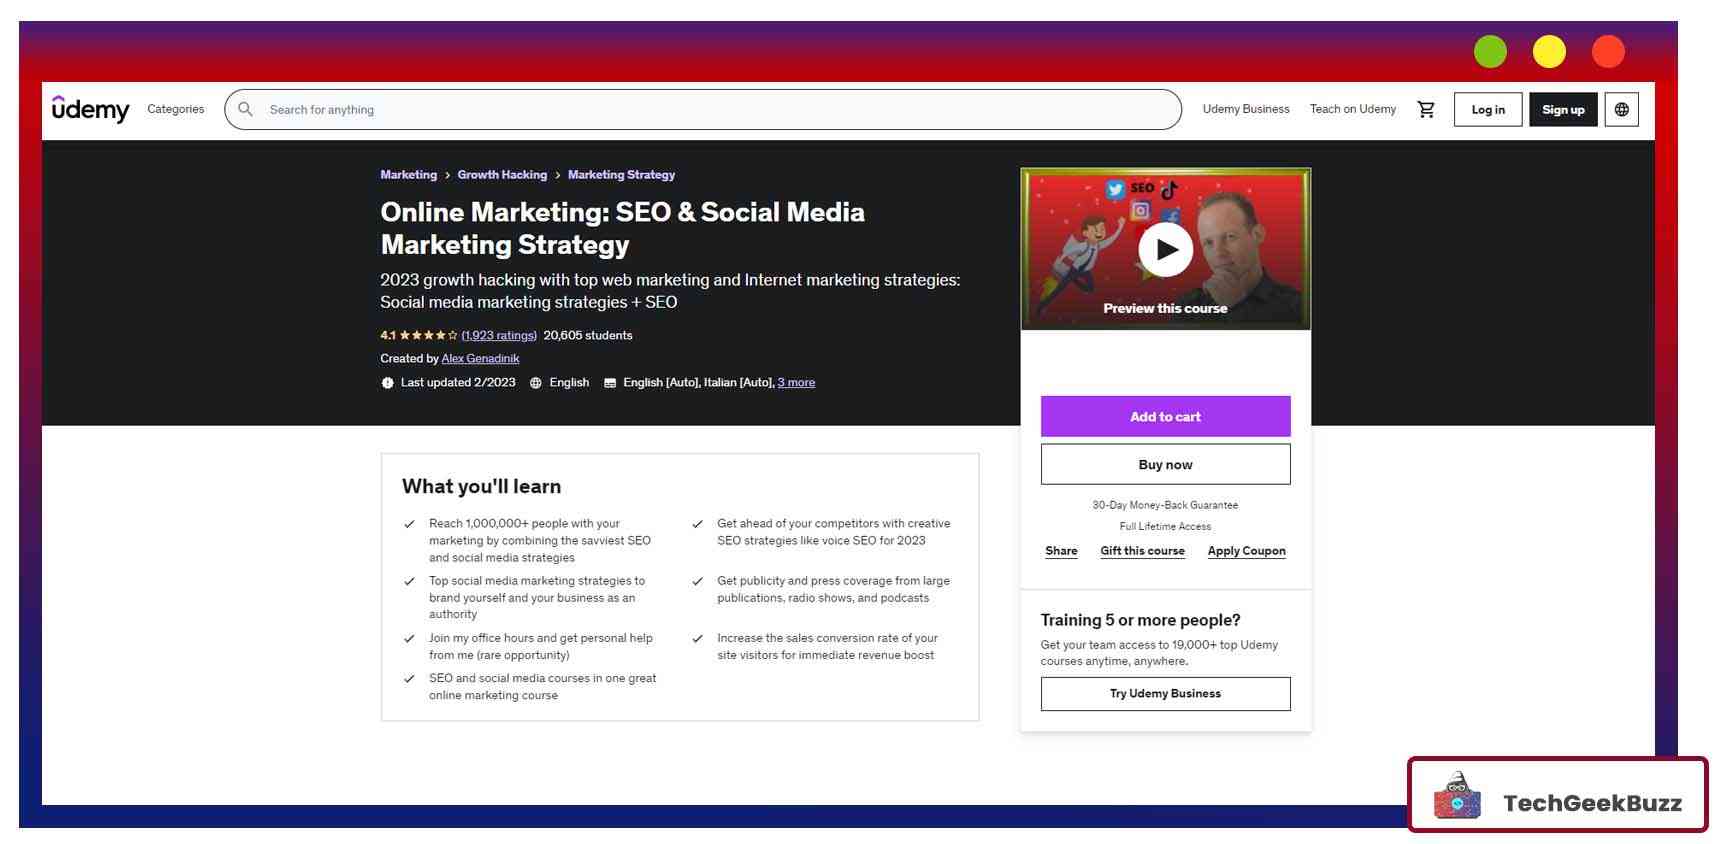 Online Marketing: SEO & Social Media Marketing Strategy